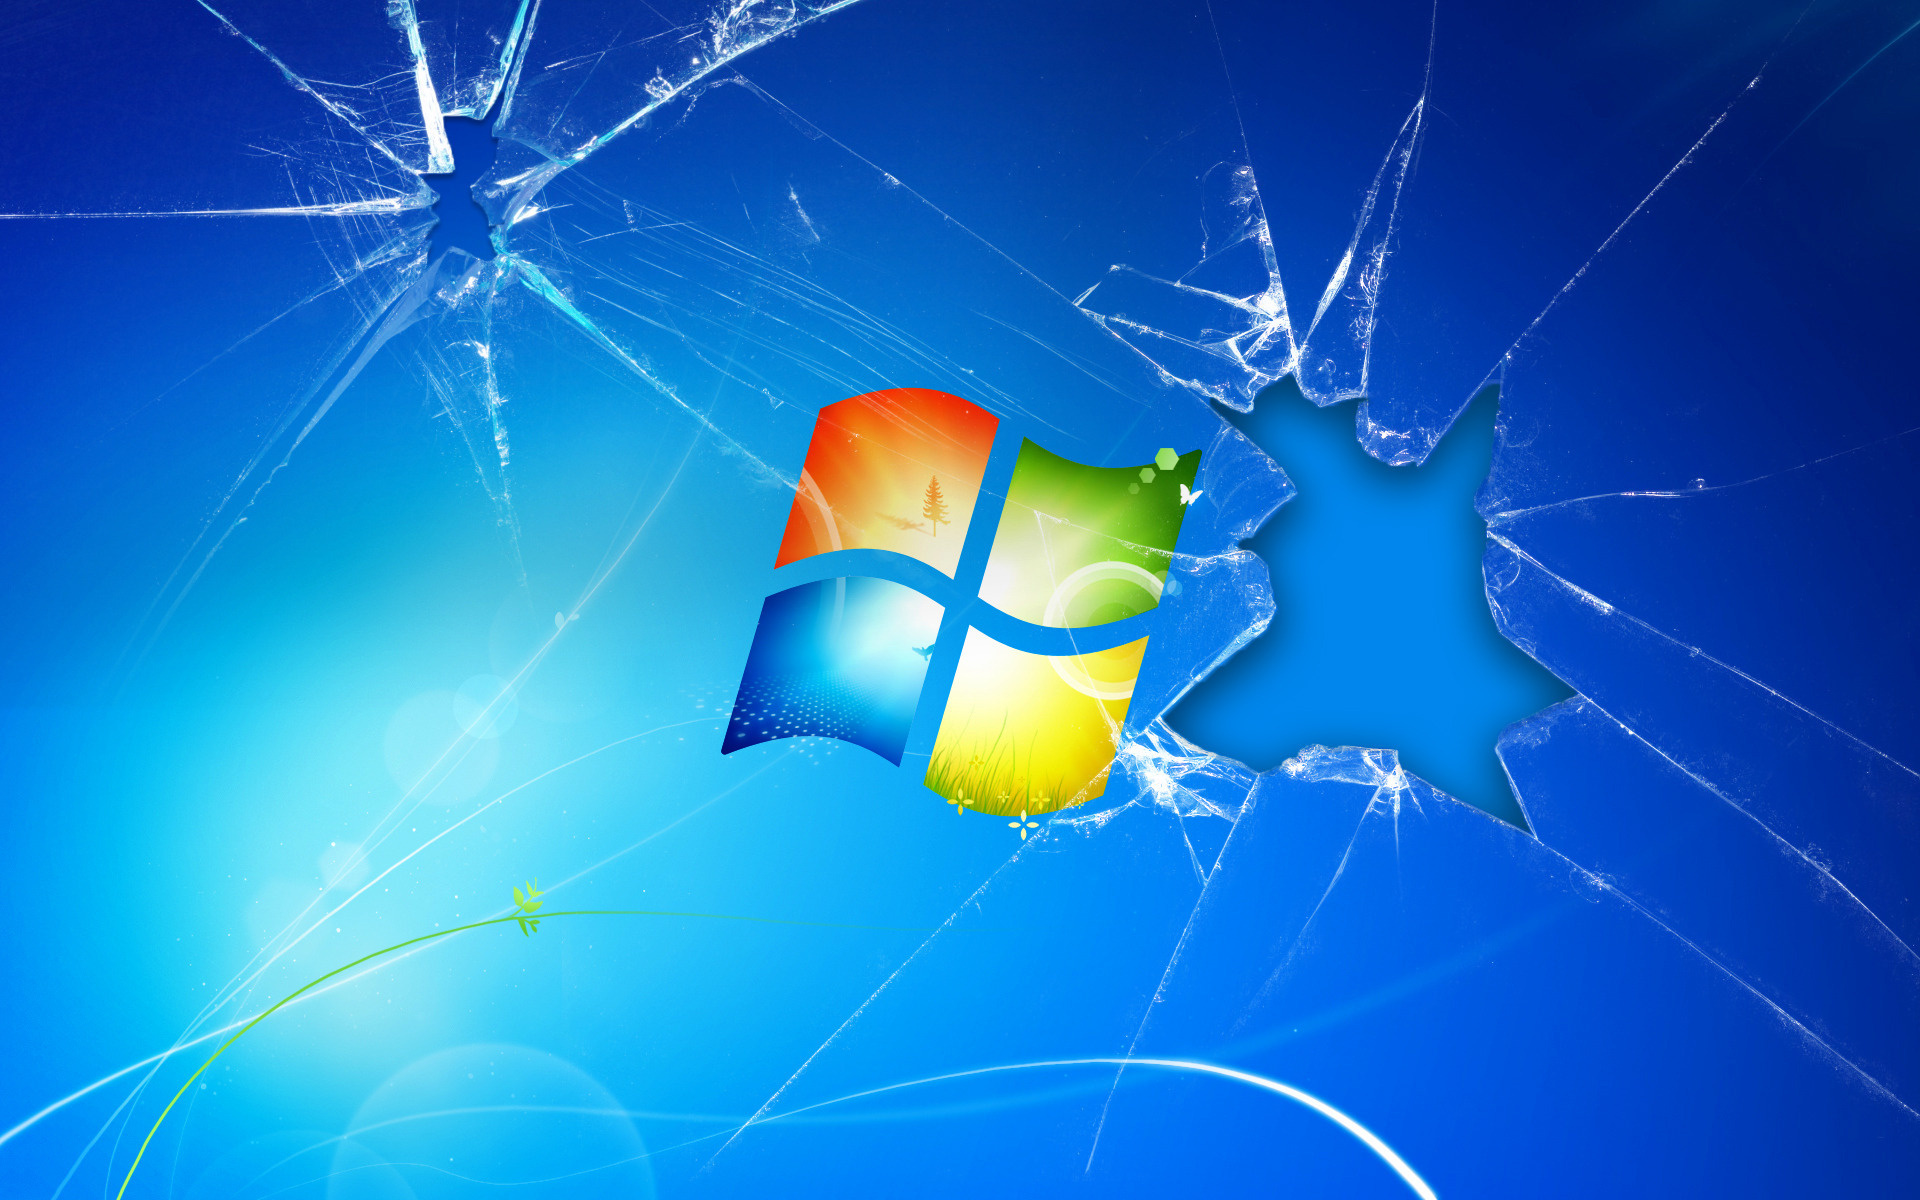 Windows Glass Background Broken Image Offers Running Goodwp